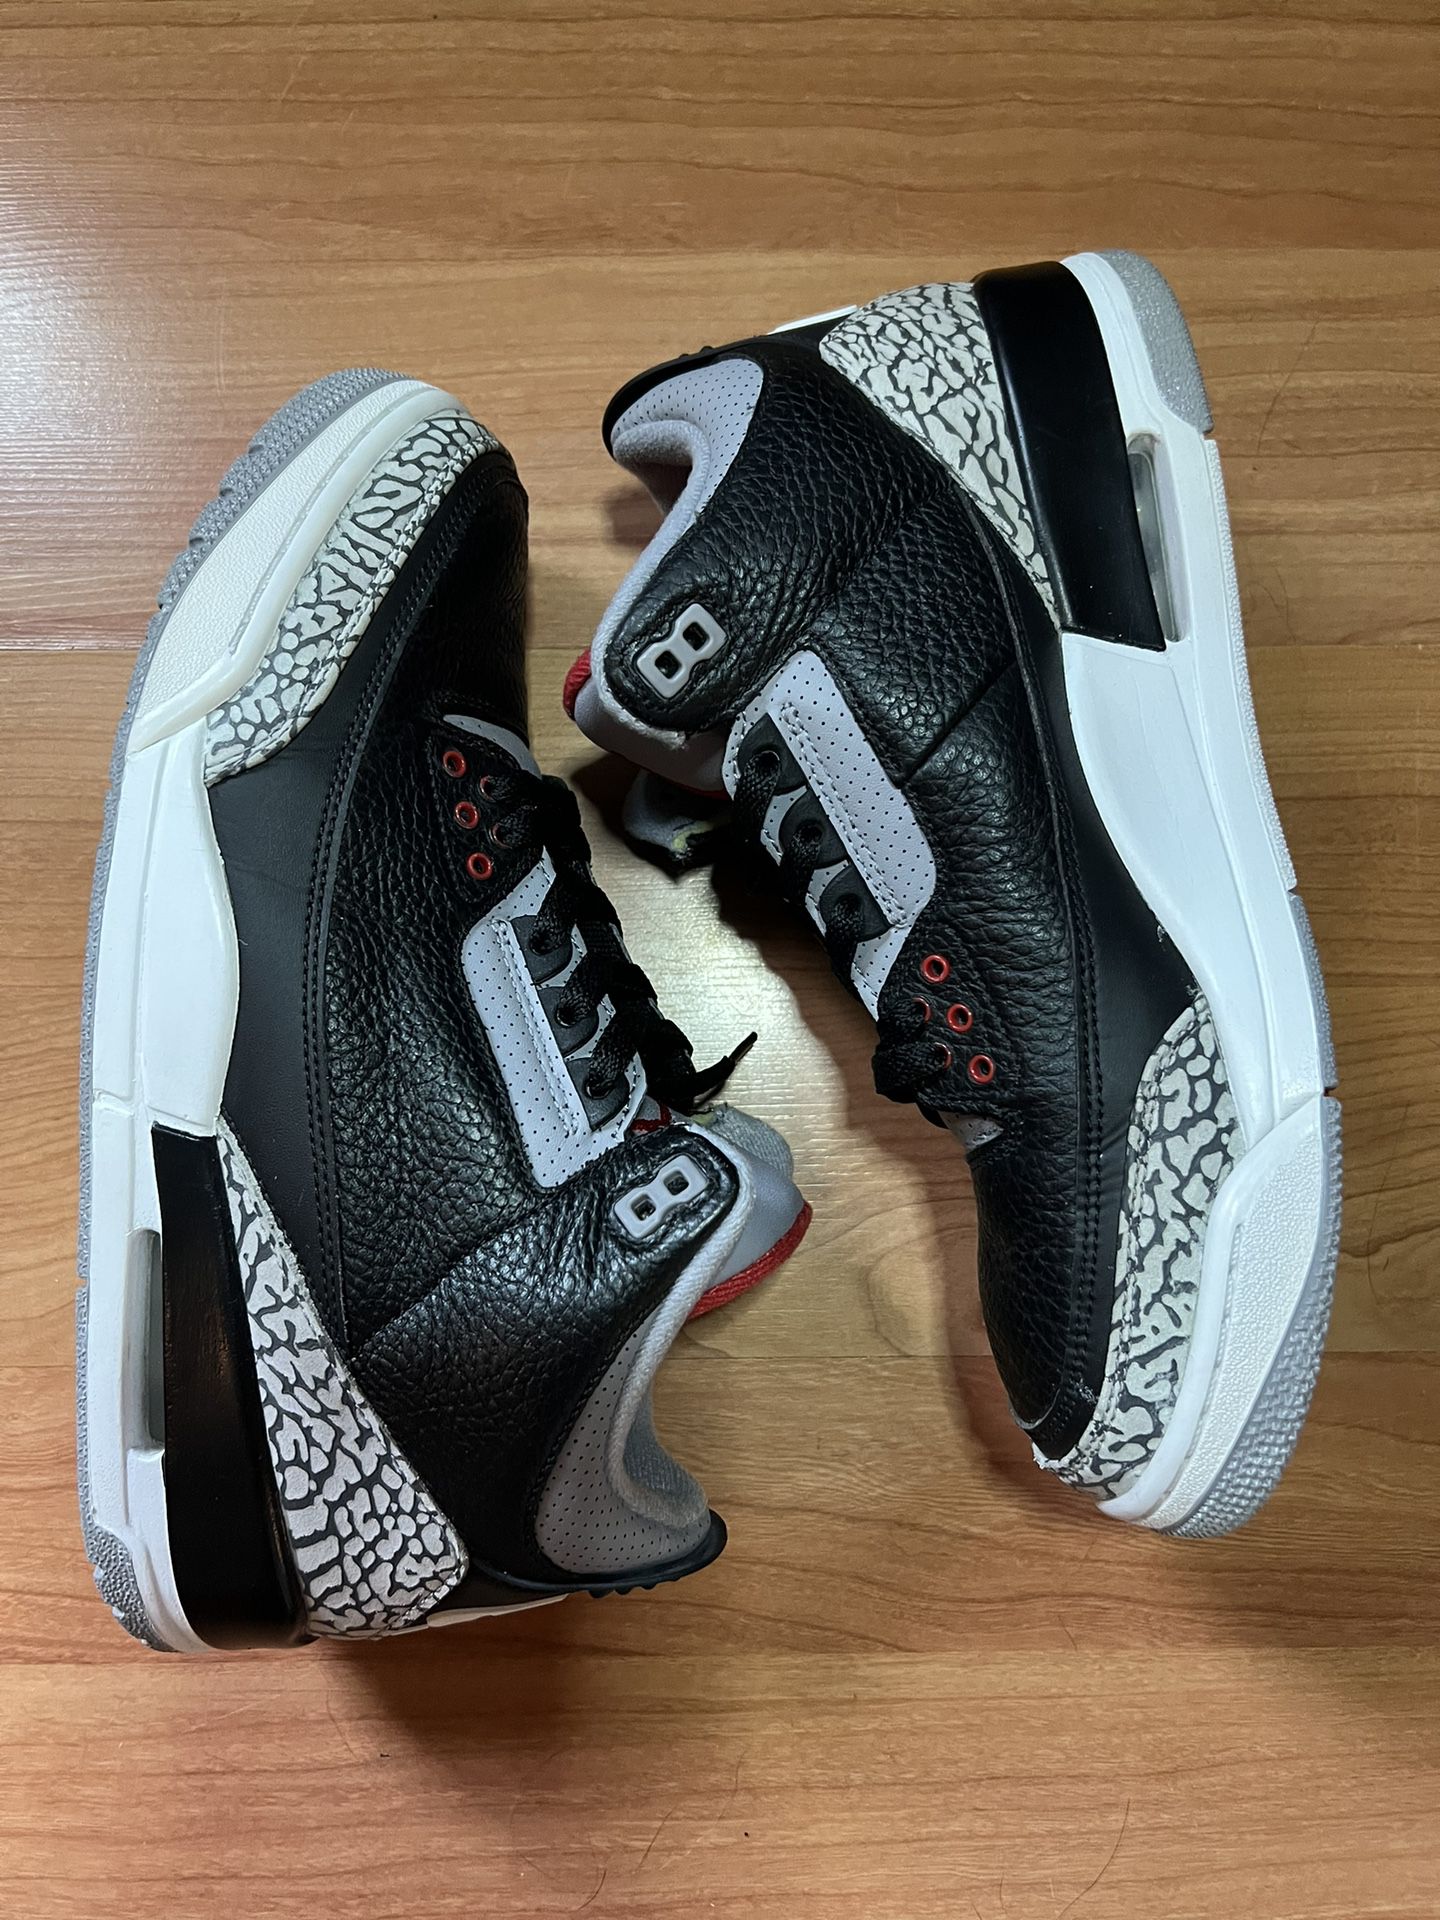 Jordan 3 Black cement (Size 9.5)